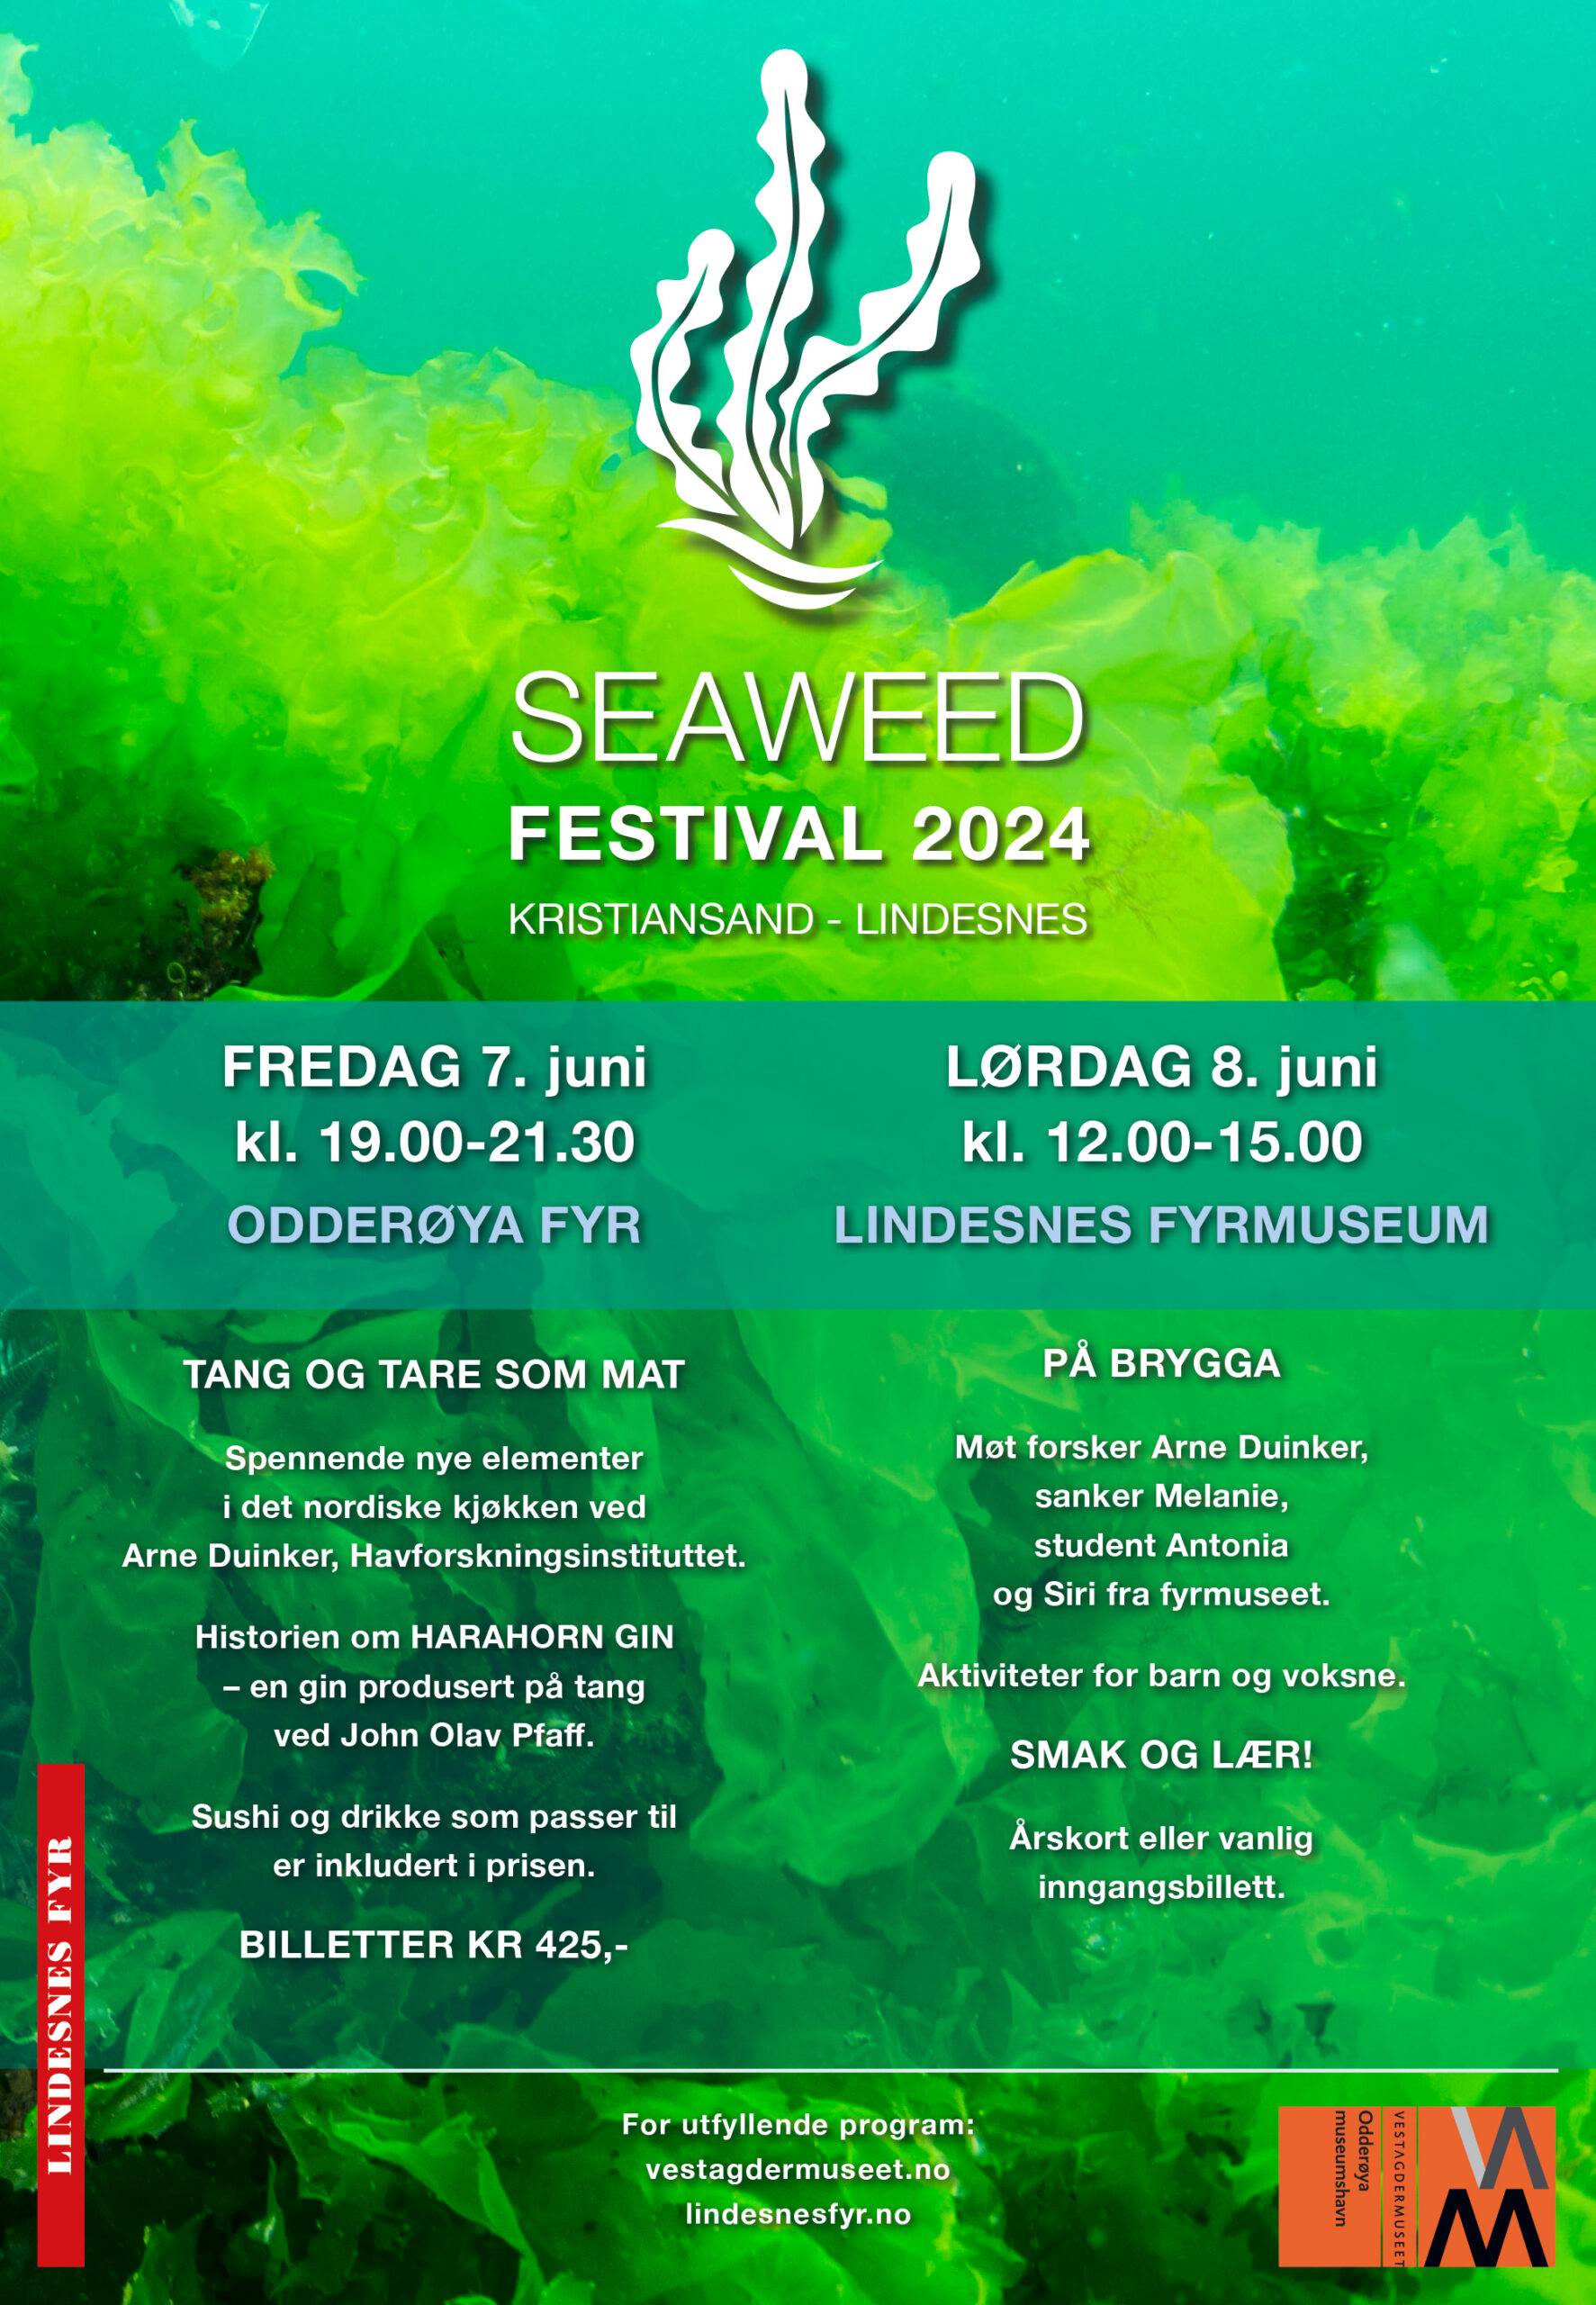 Program Seaweed festivalen 2024.